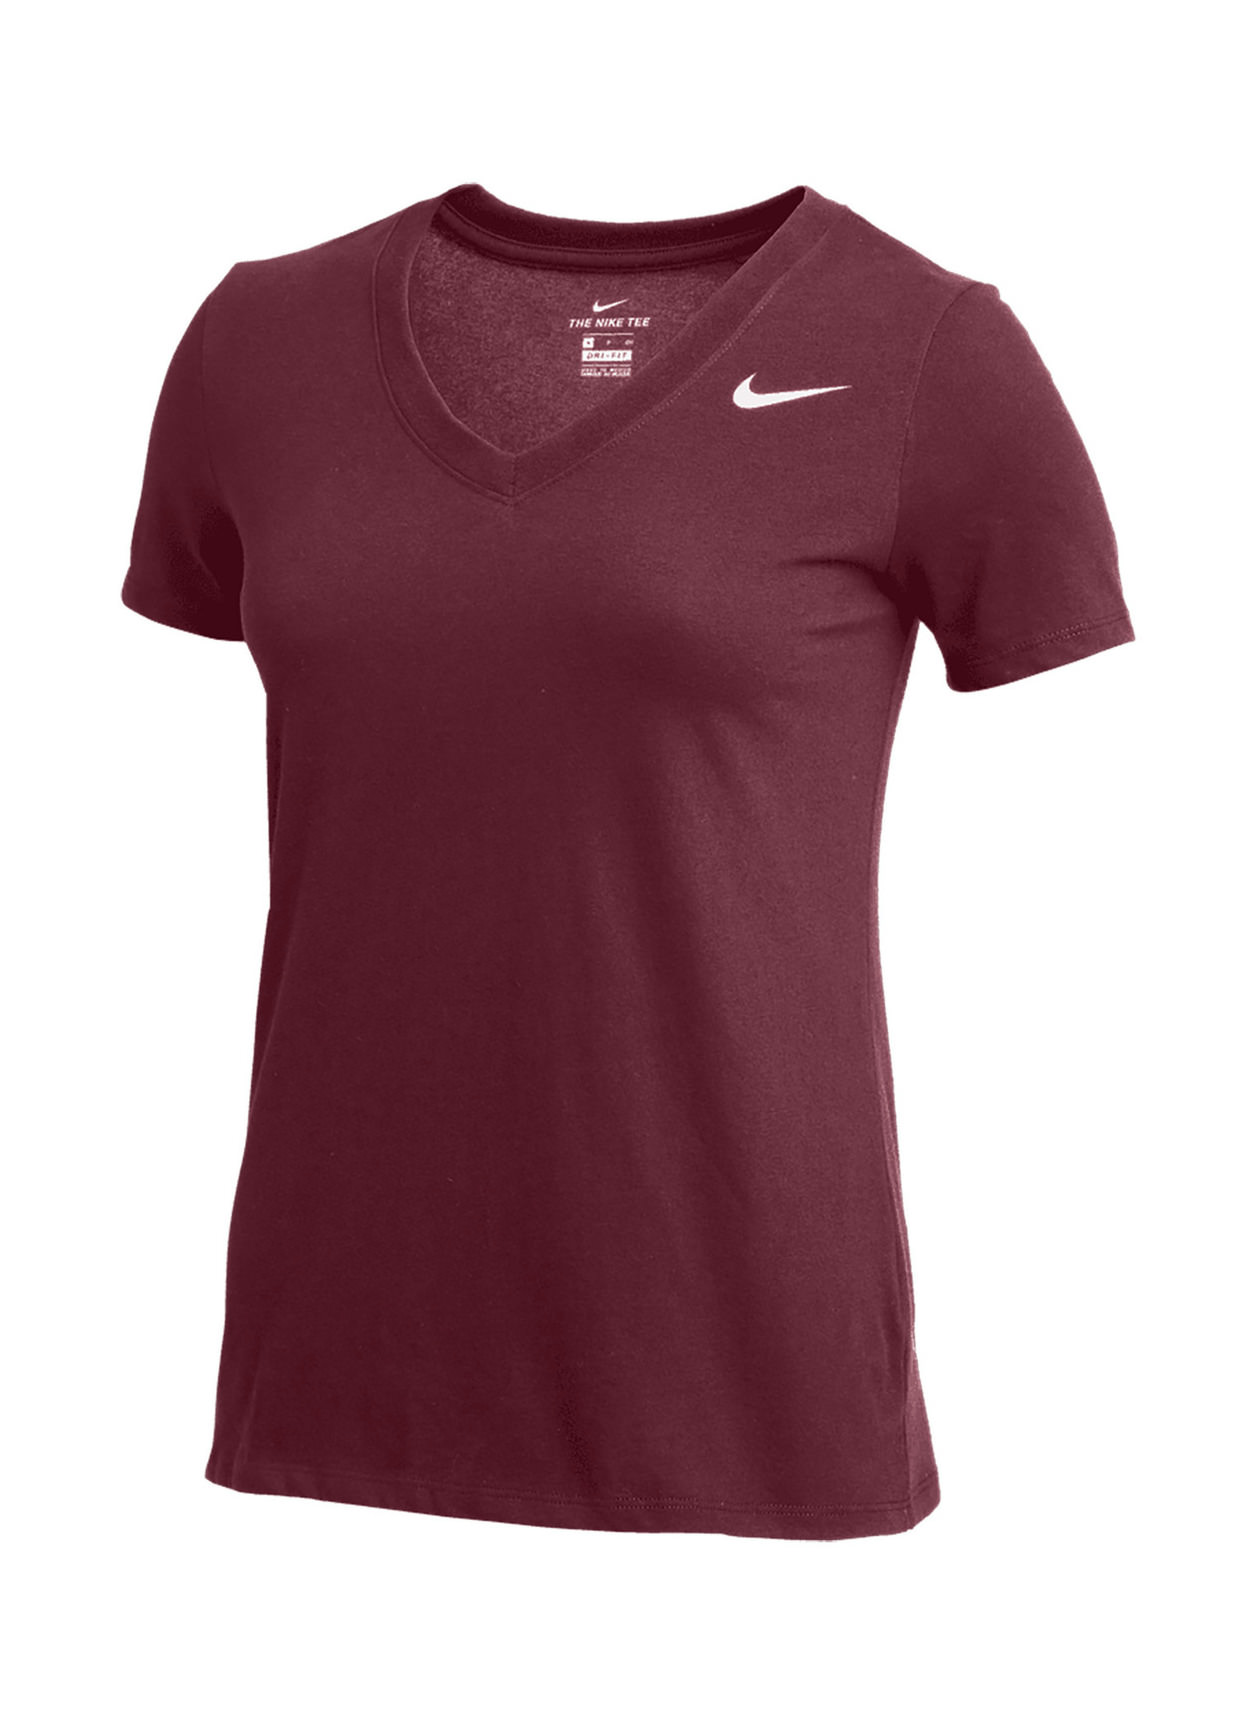 Nike Women's Deep Maroon / White Dri-FIT T-Shirt